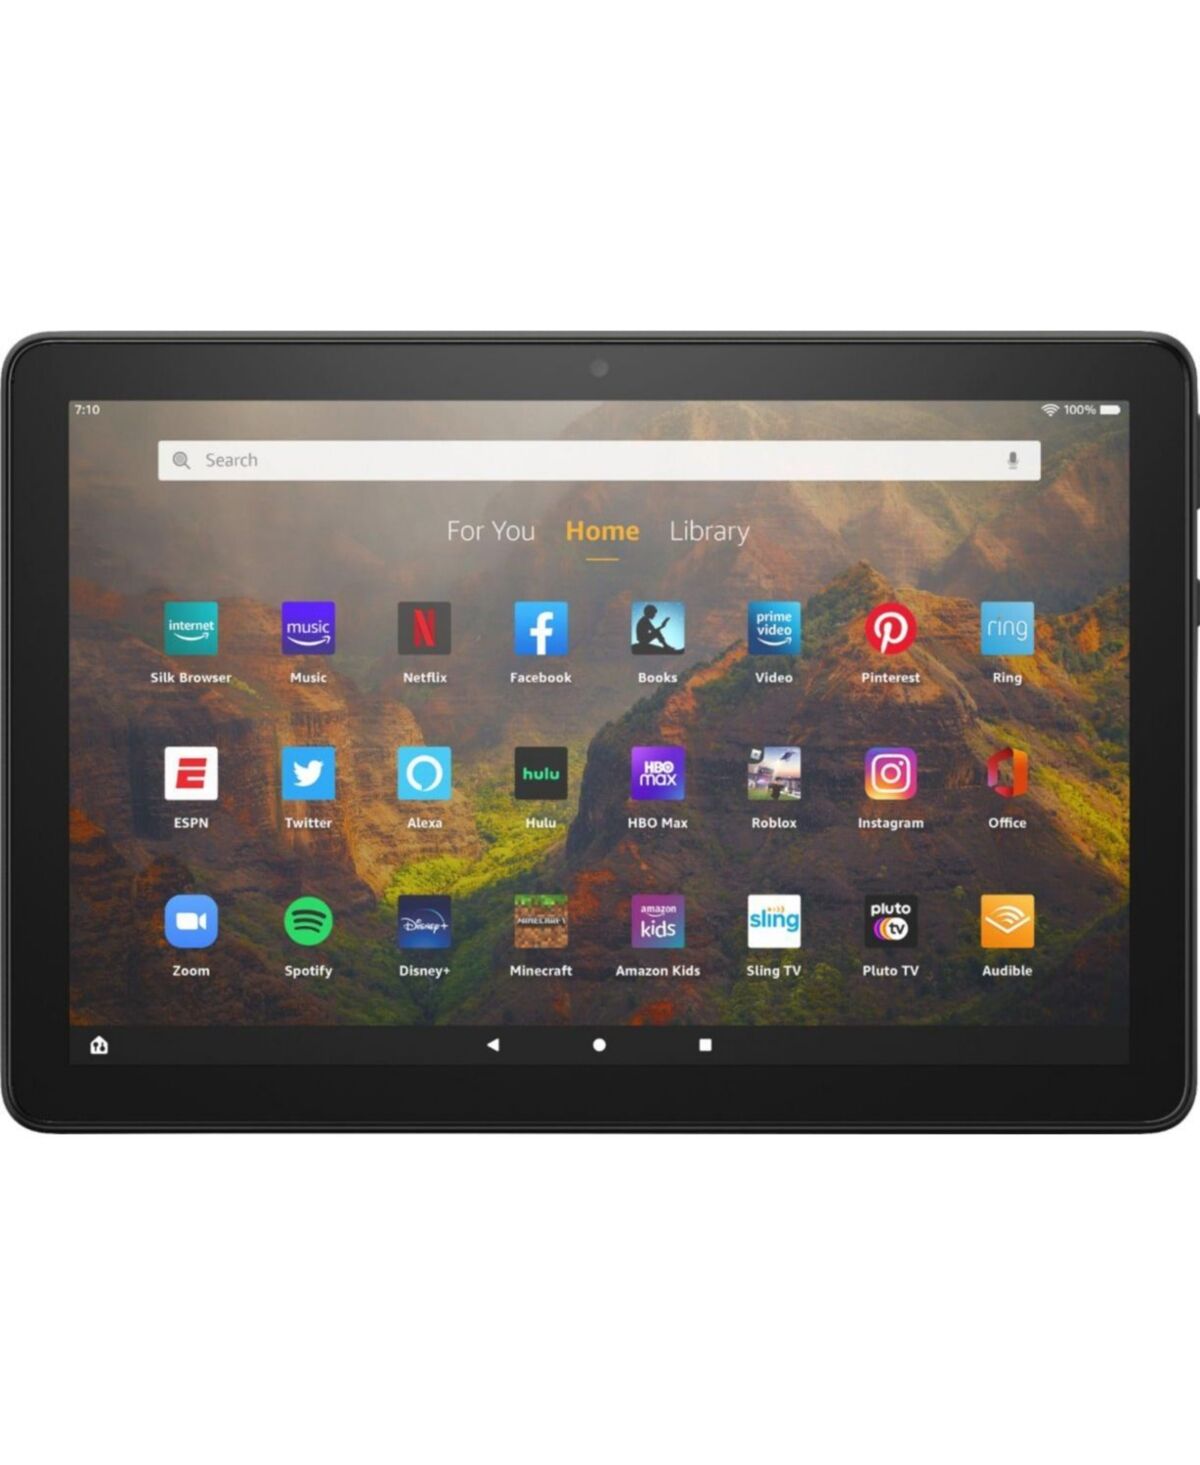 Amazon Fire Hd 10 Tablet 32GB - Black